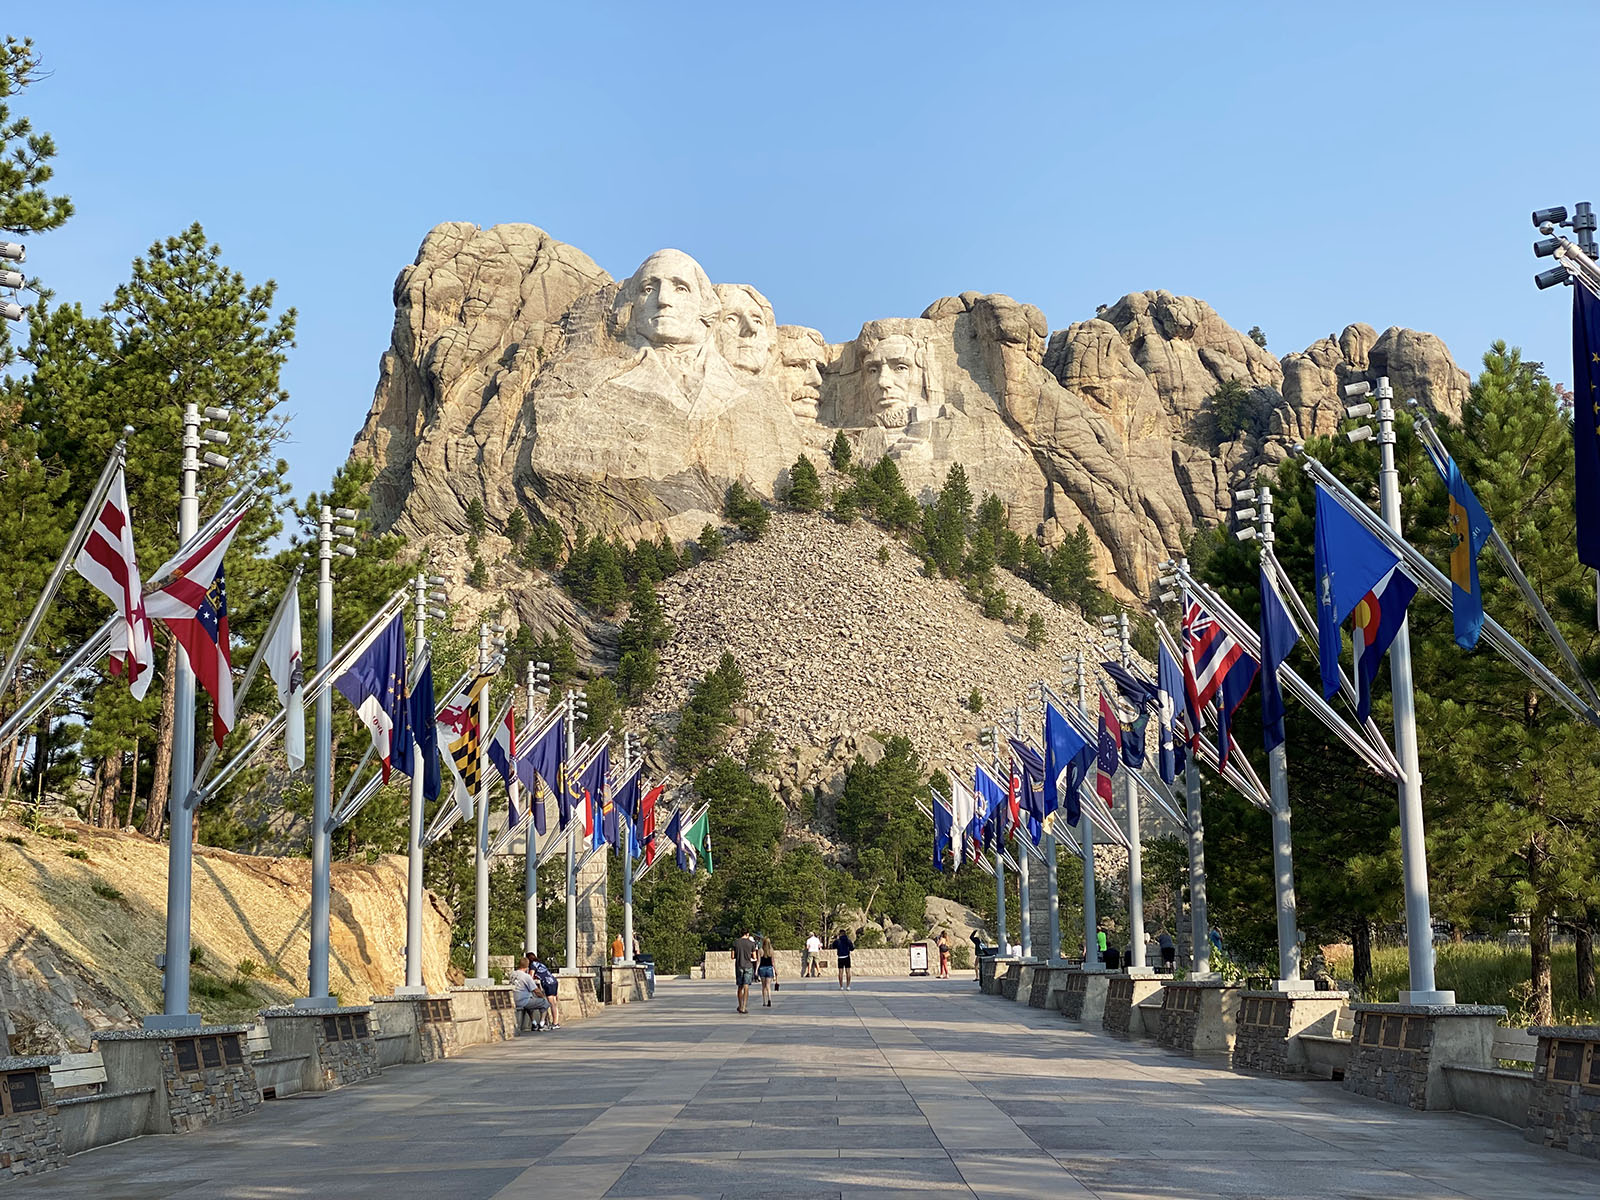 Avenue of Flags, Mount Rushmore. Credit: Carolina Valenzuela